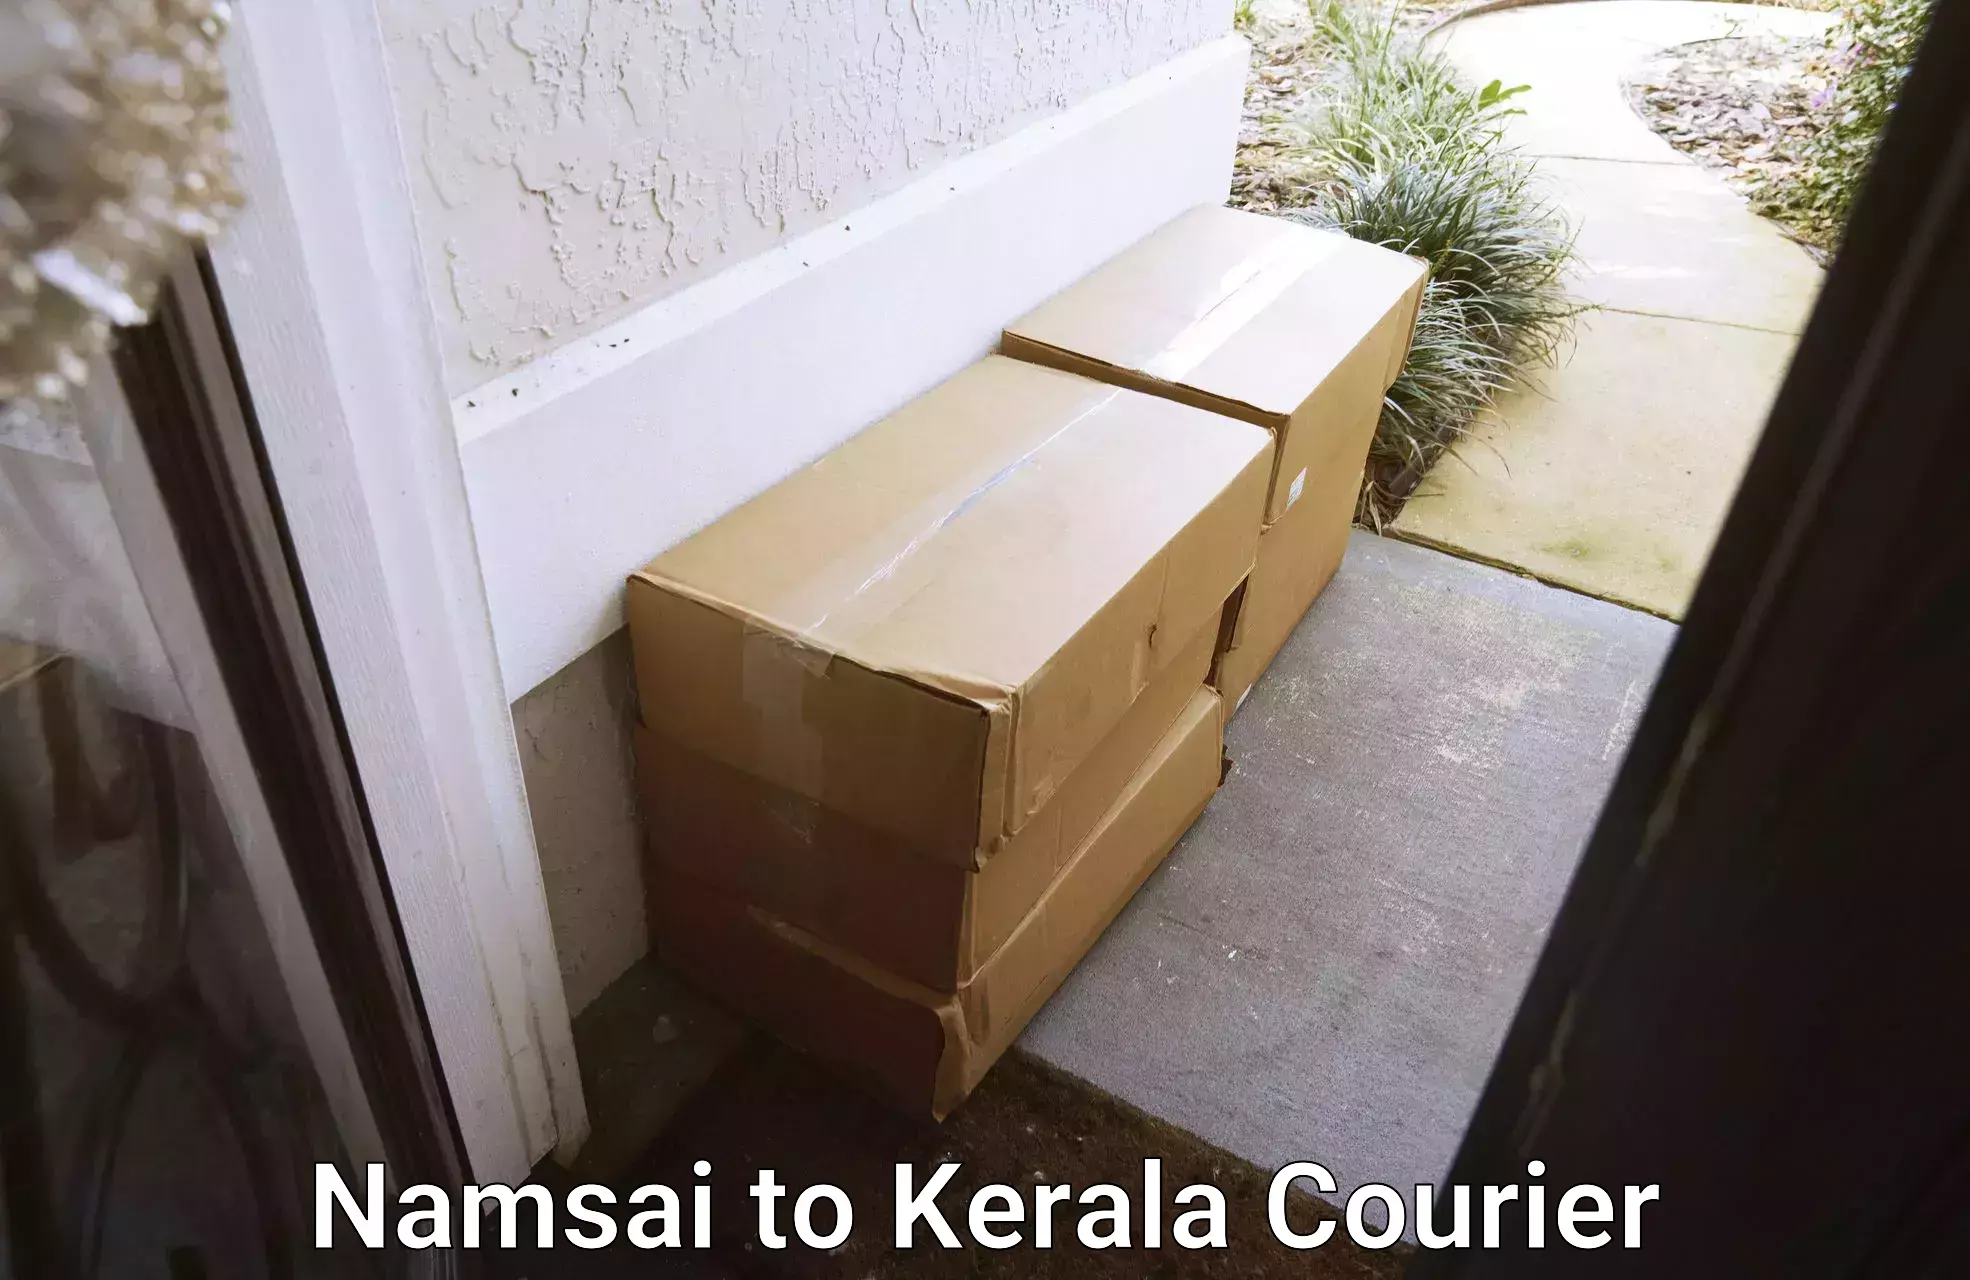 Multi-modal transportation in Namsai to Kerala